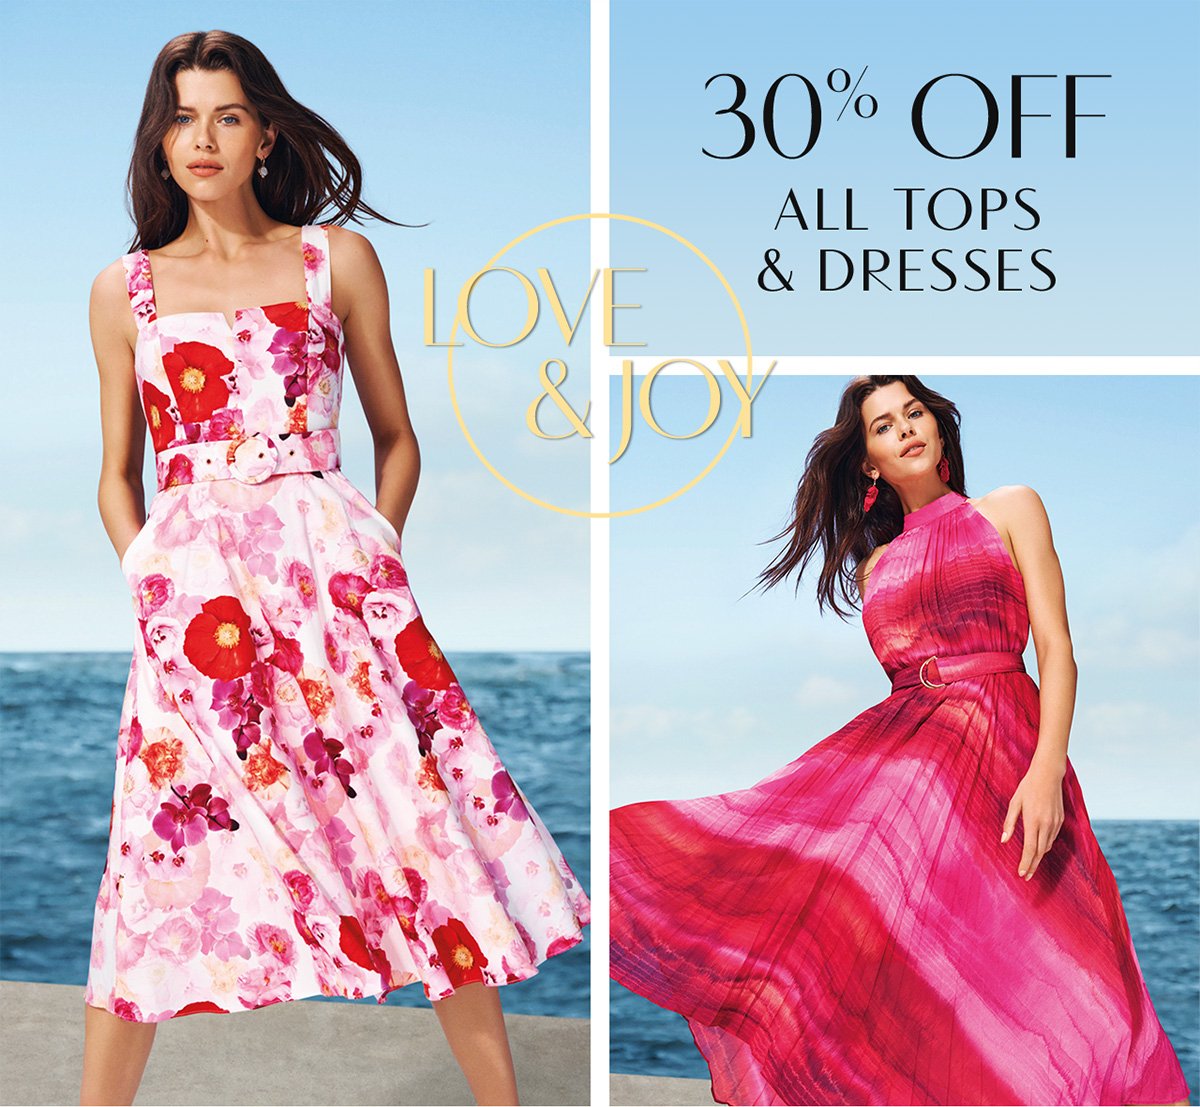 Love &Joy. 30% off all tops & dresses